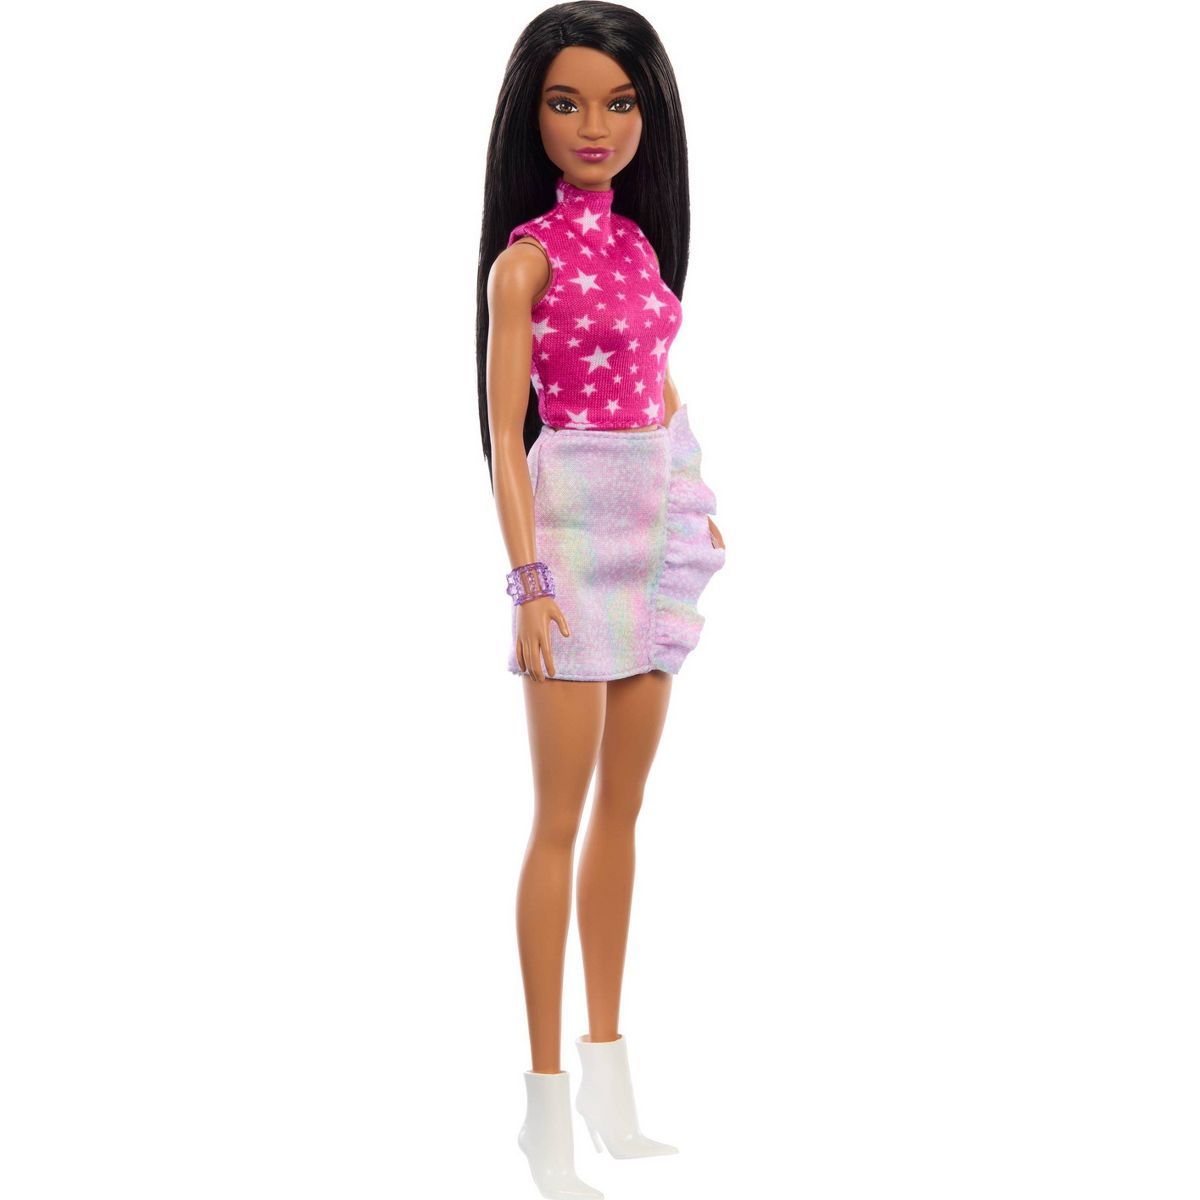 Barbie Fashionista Doll Rock Pink And Metallic | Target